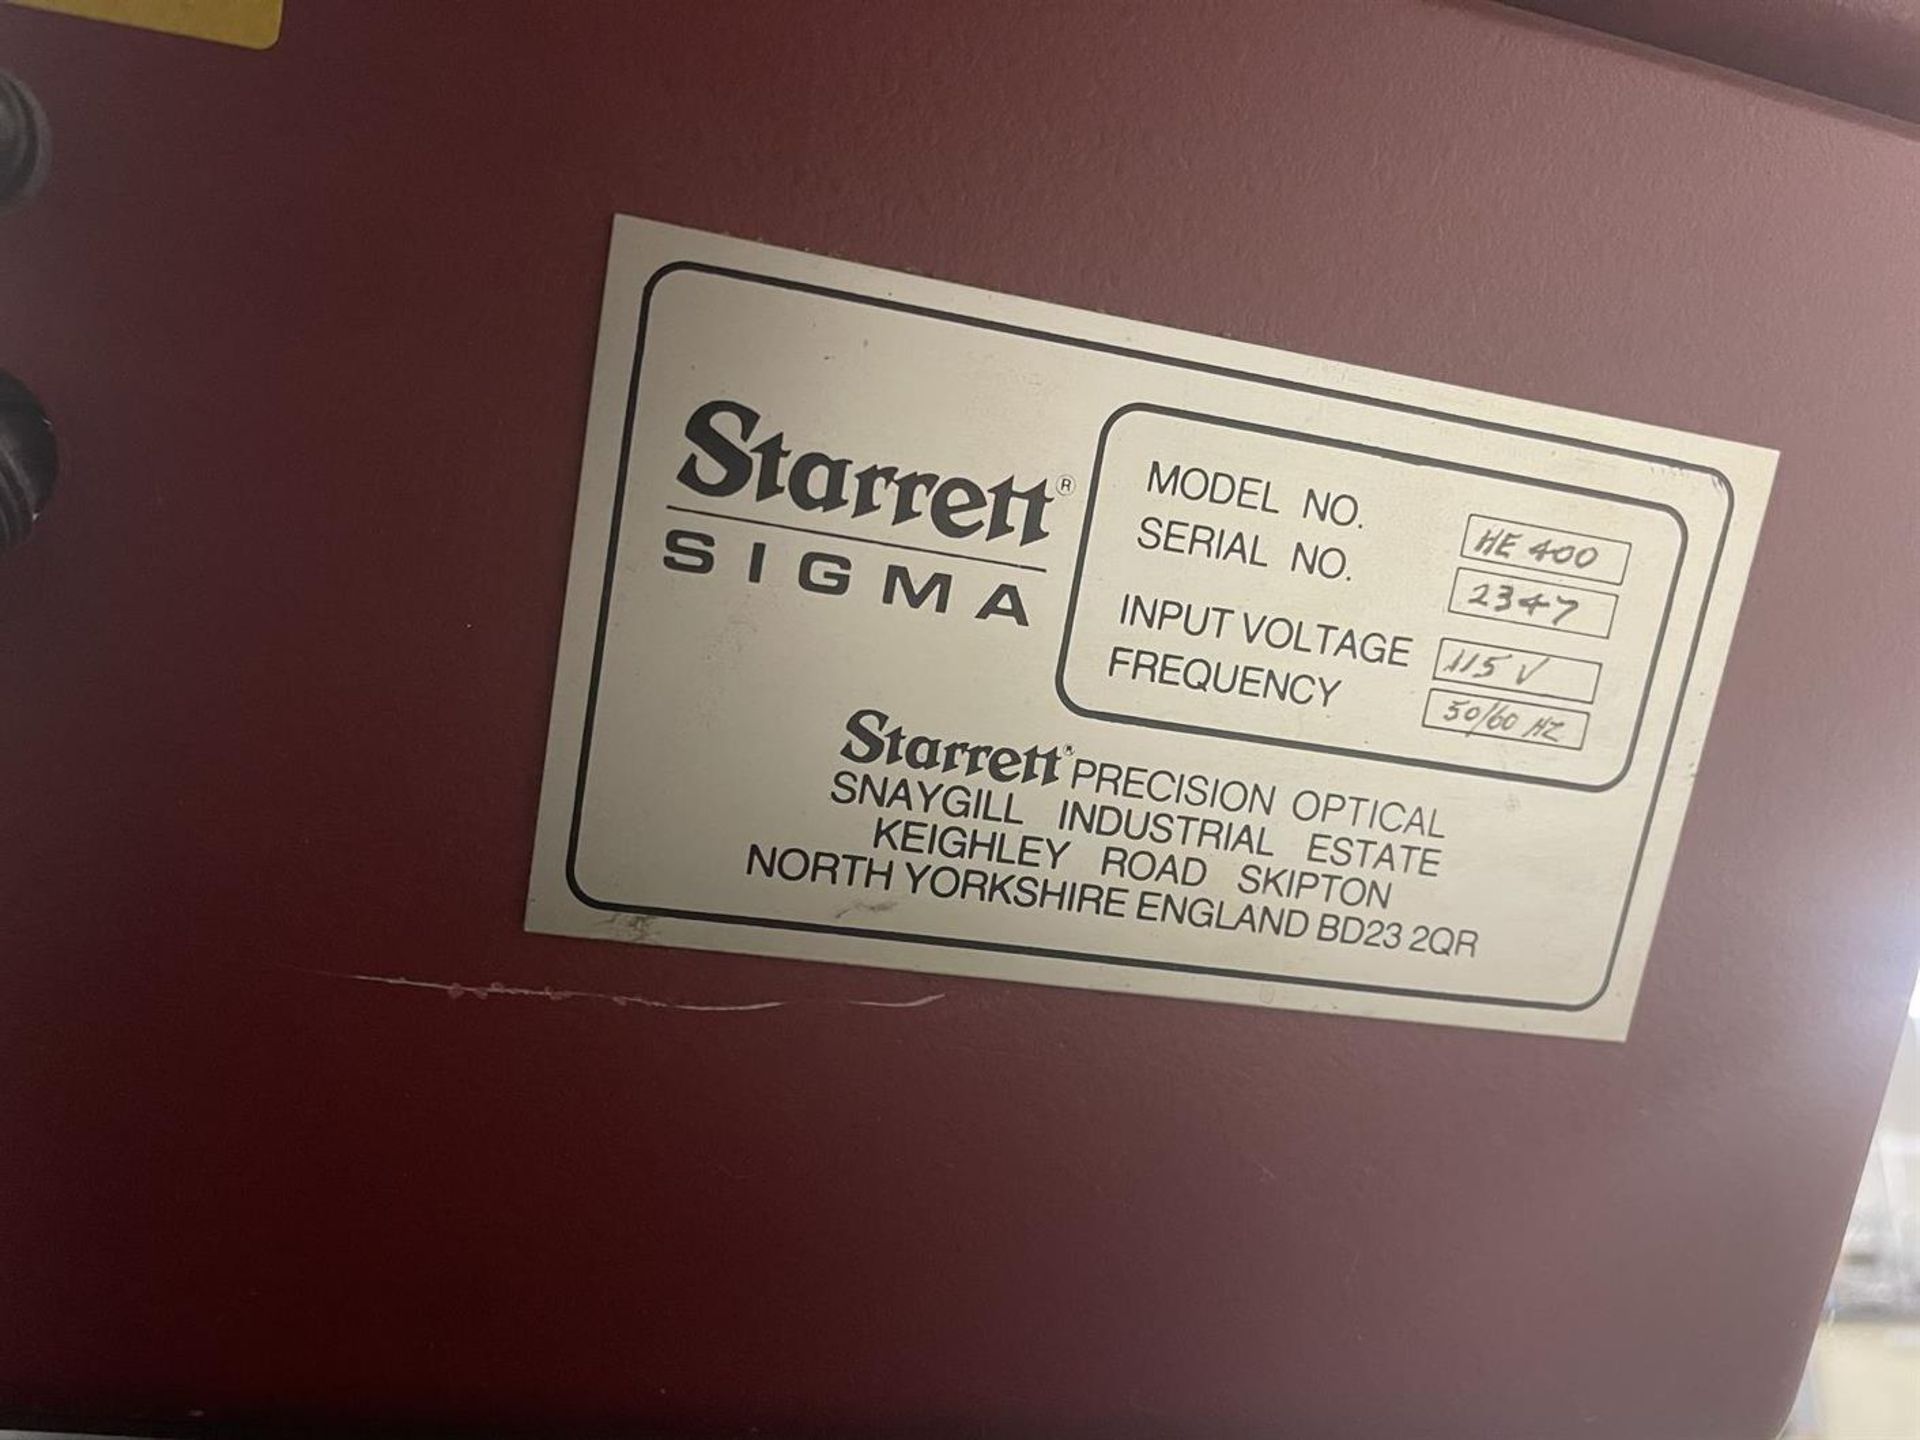 STARRETT SIGMA HE400 Profile Projector, s/n 2347, w/ Quick-Chek DRO - Image 5 of 5